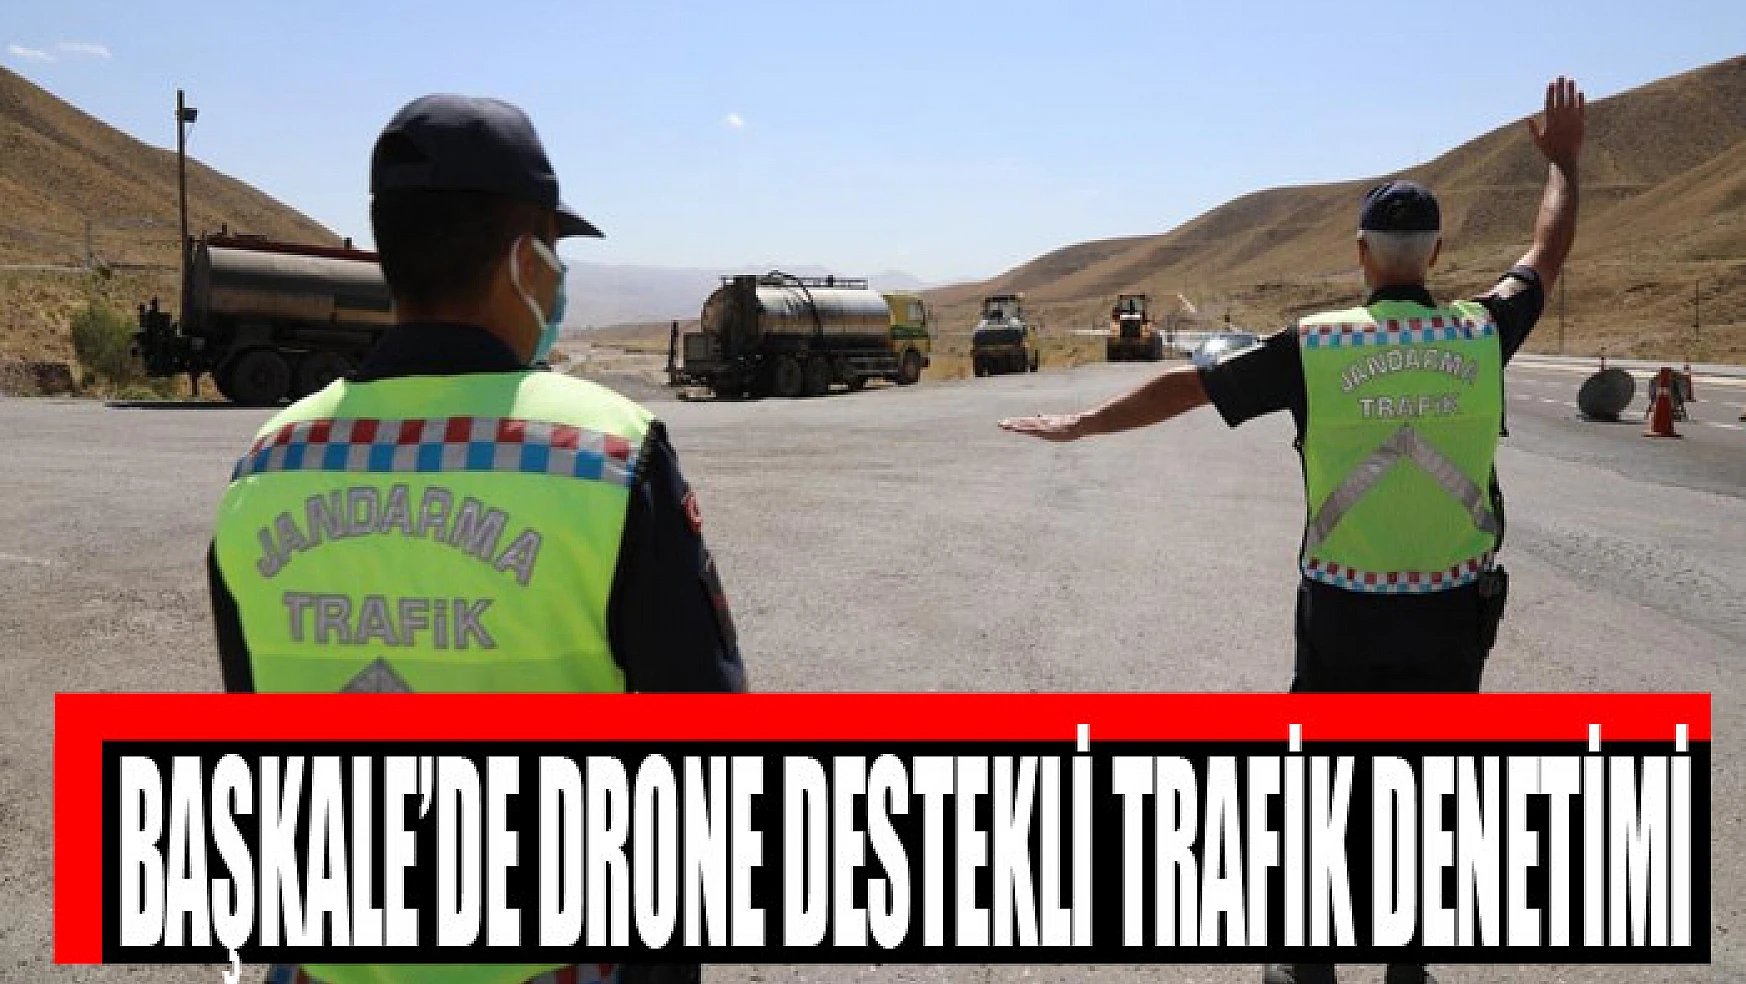 Başkale'de drone destekli trafik denetimi